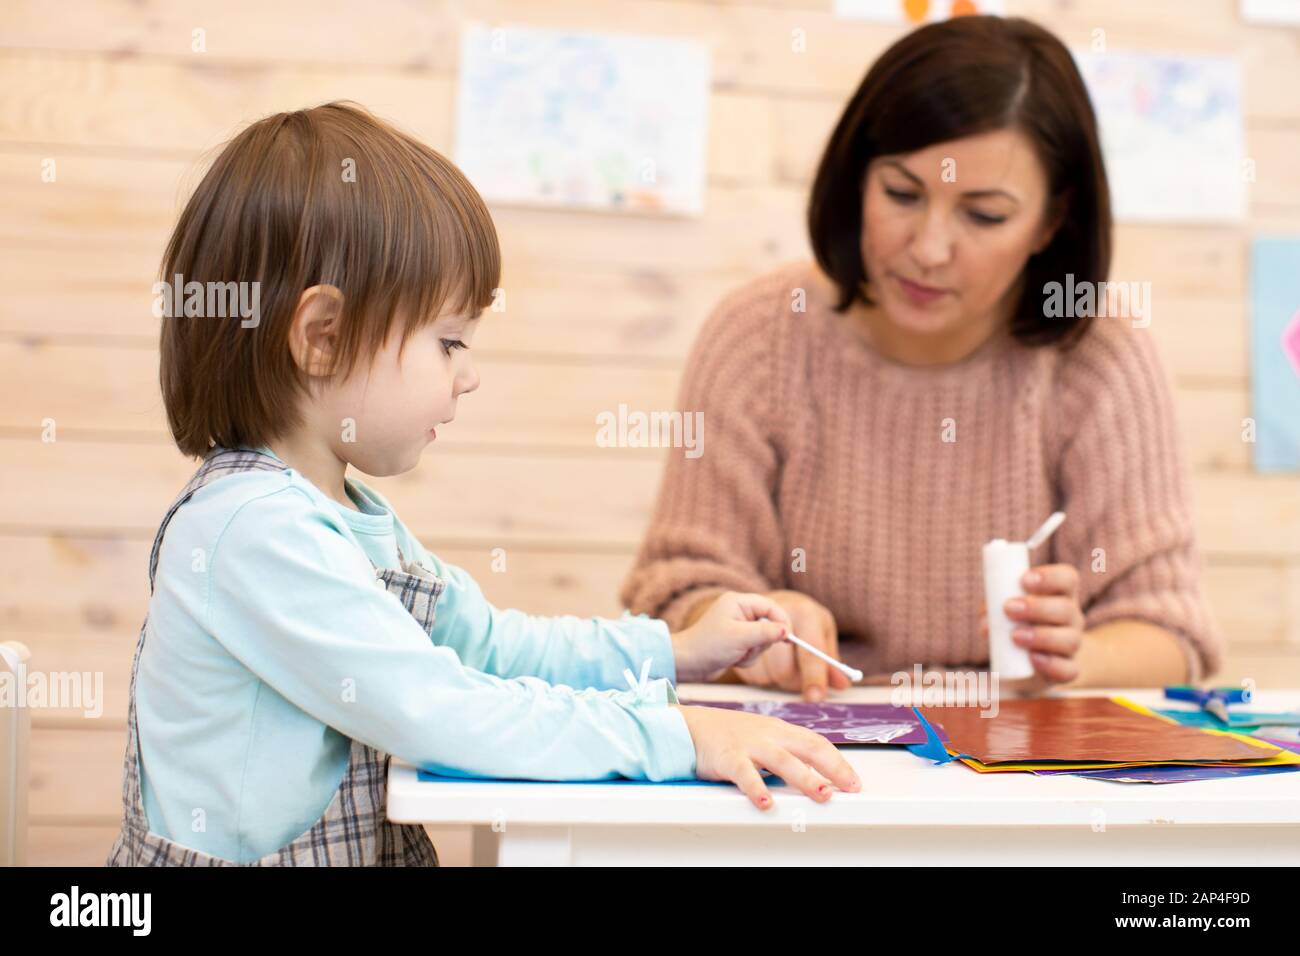 Female teacher play teaches preschooler child in day care center Stock Photo